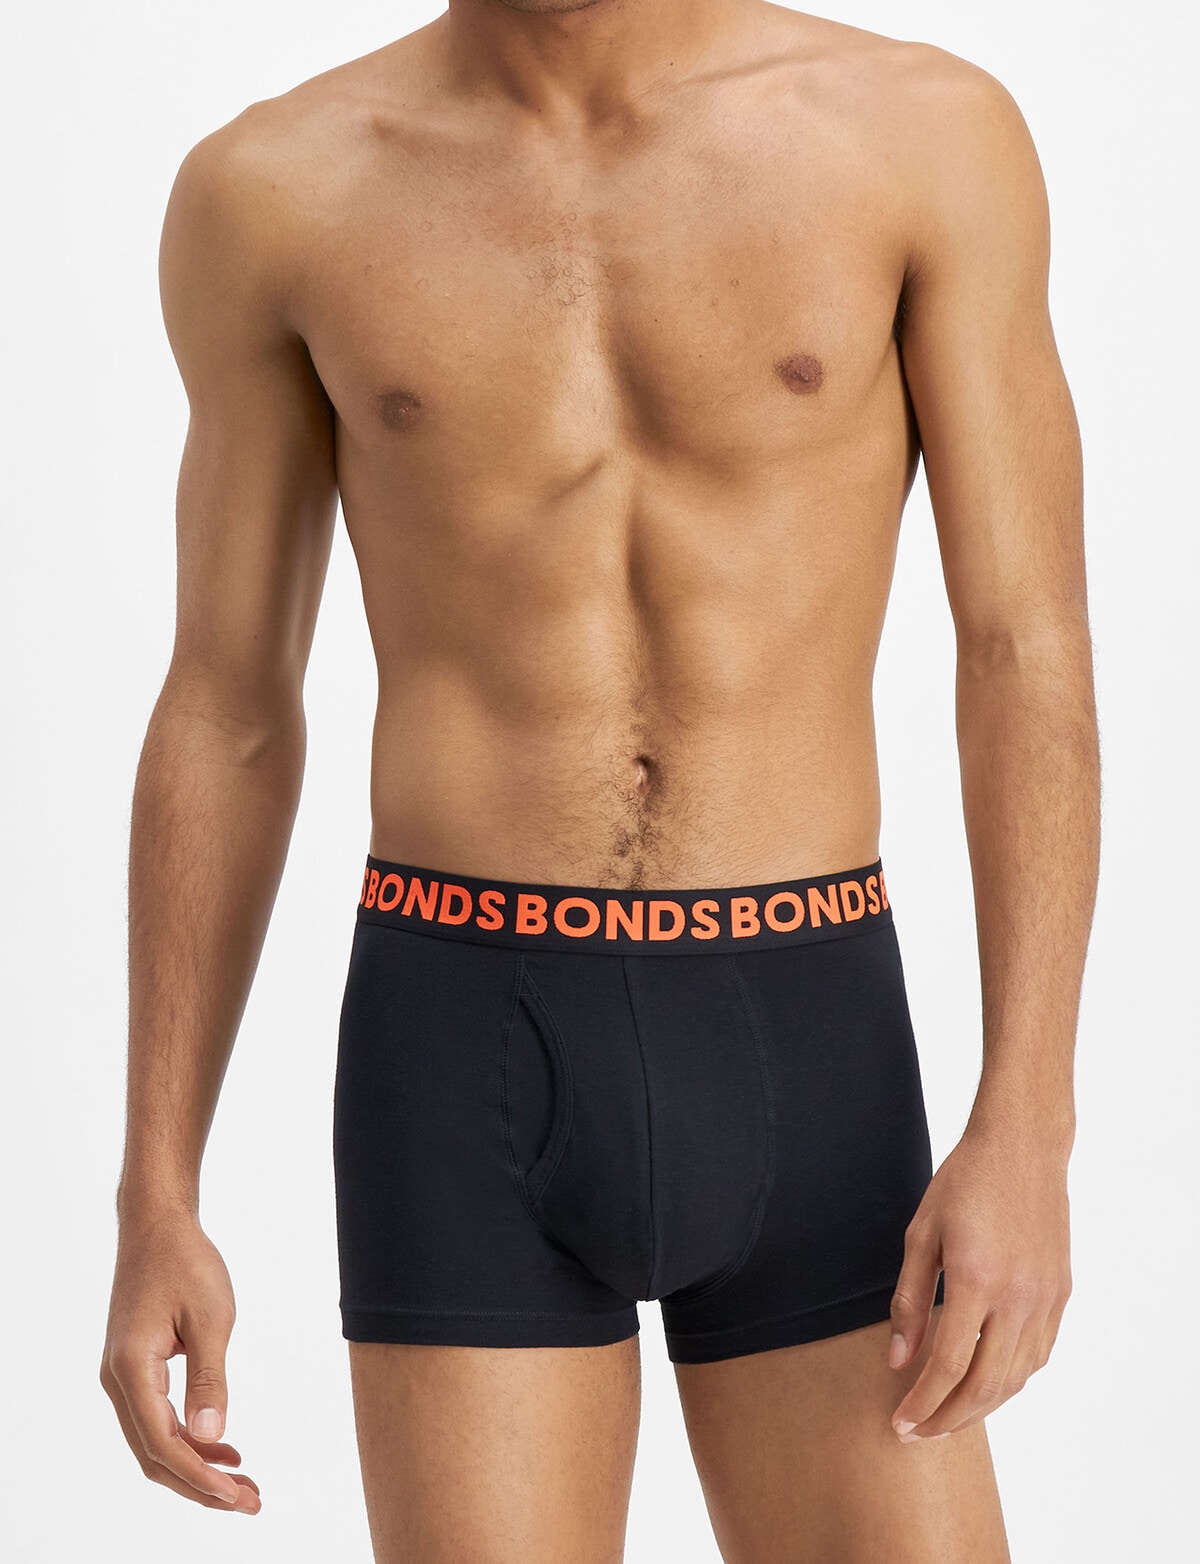 Bonds Originals for Men - Mens Trunks, Shorts & More